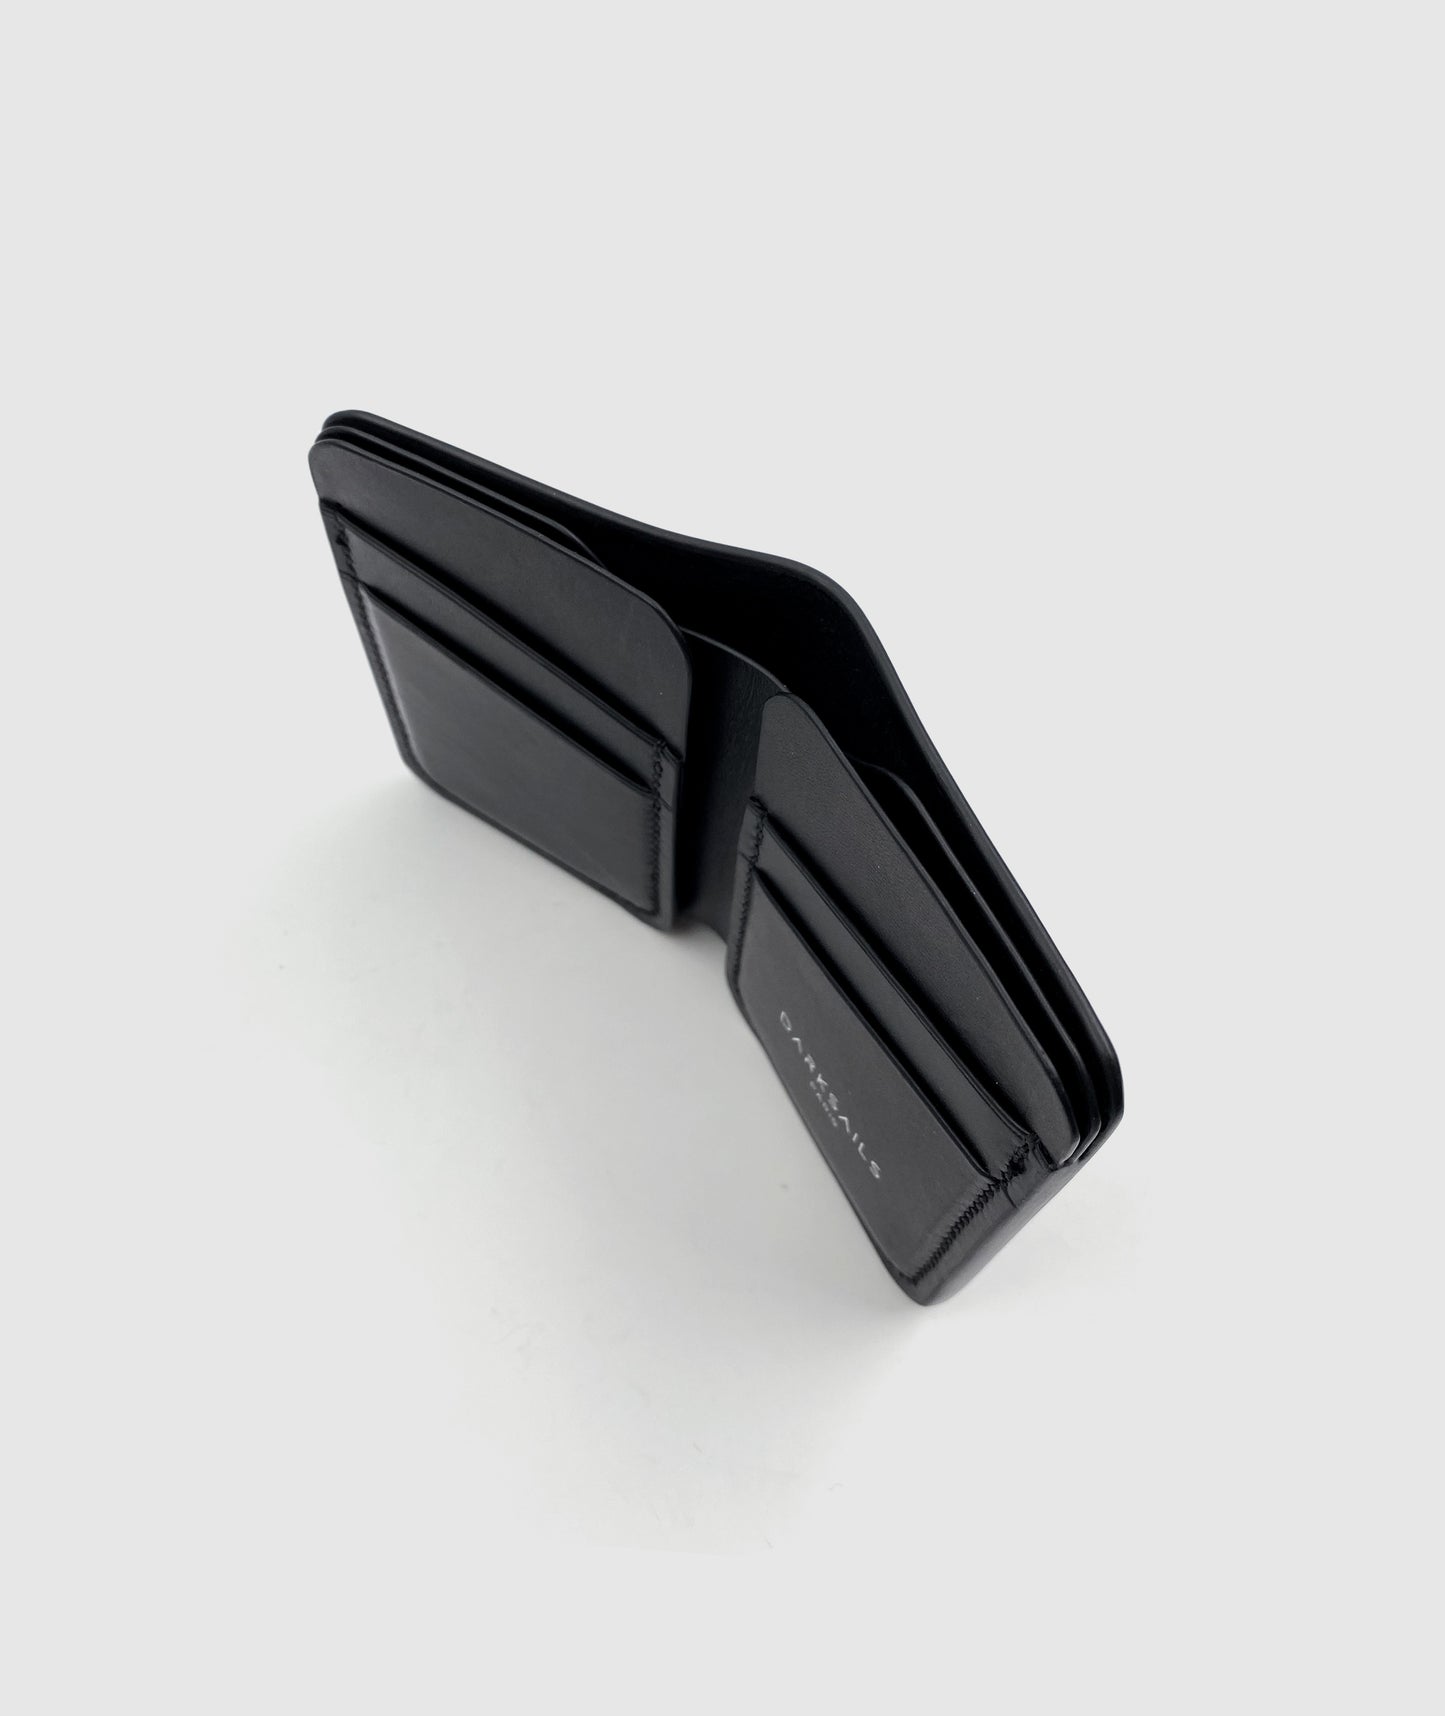 Slim black leather wallet